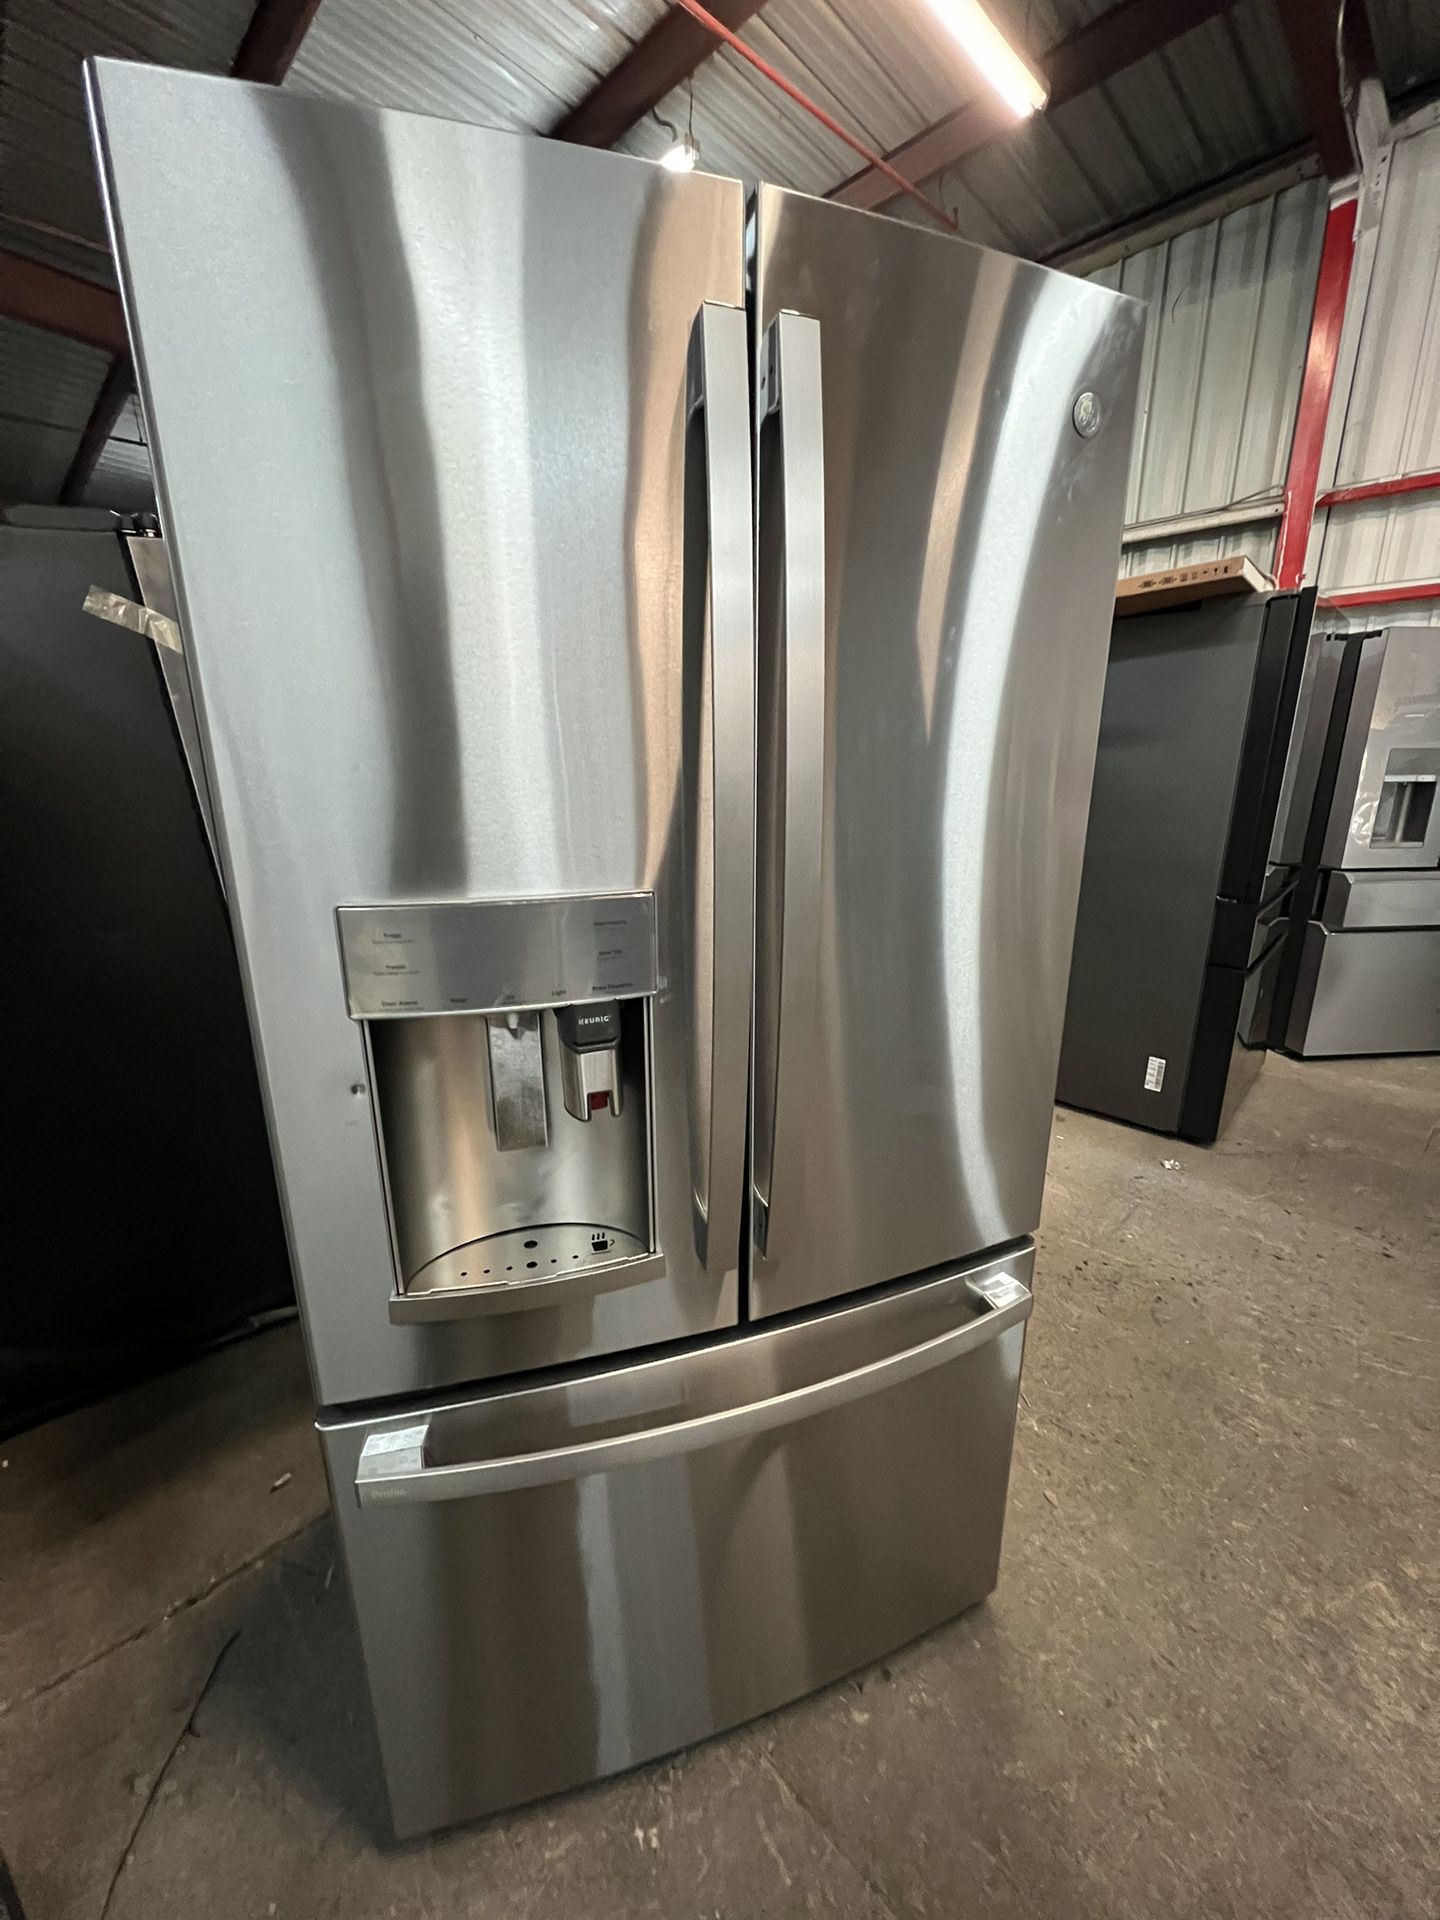 GE Profile Counter Depth Refrigerator w/ Keurig 